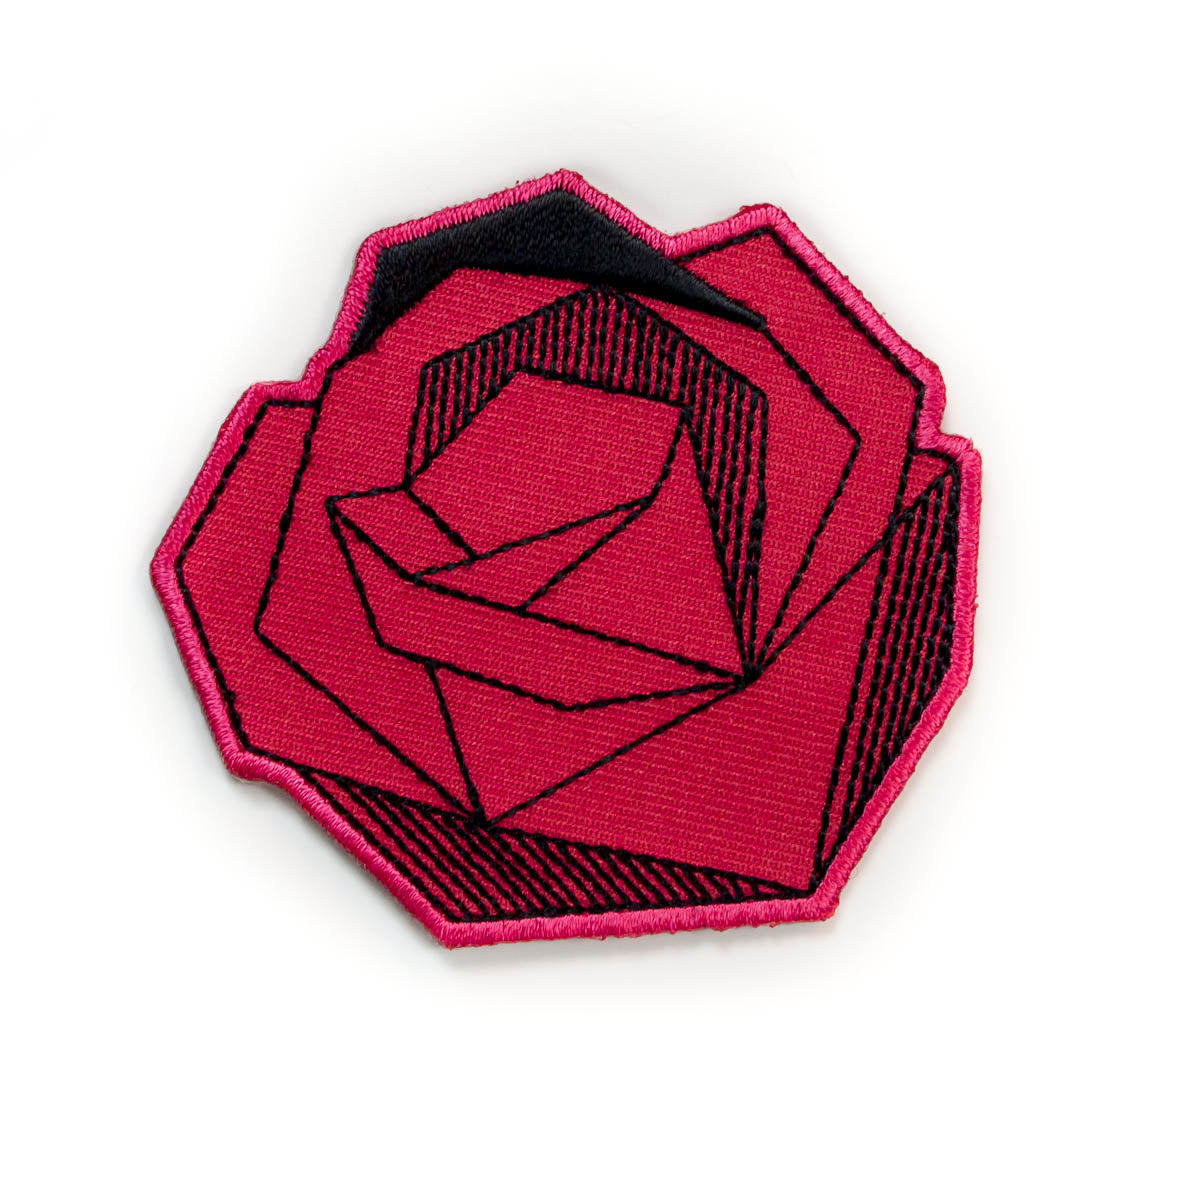 Geometric red rose